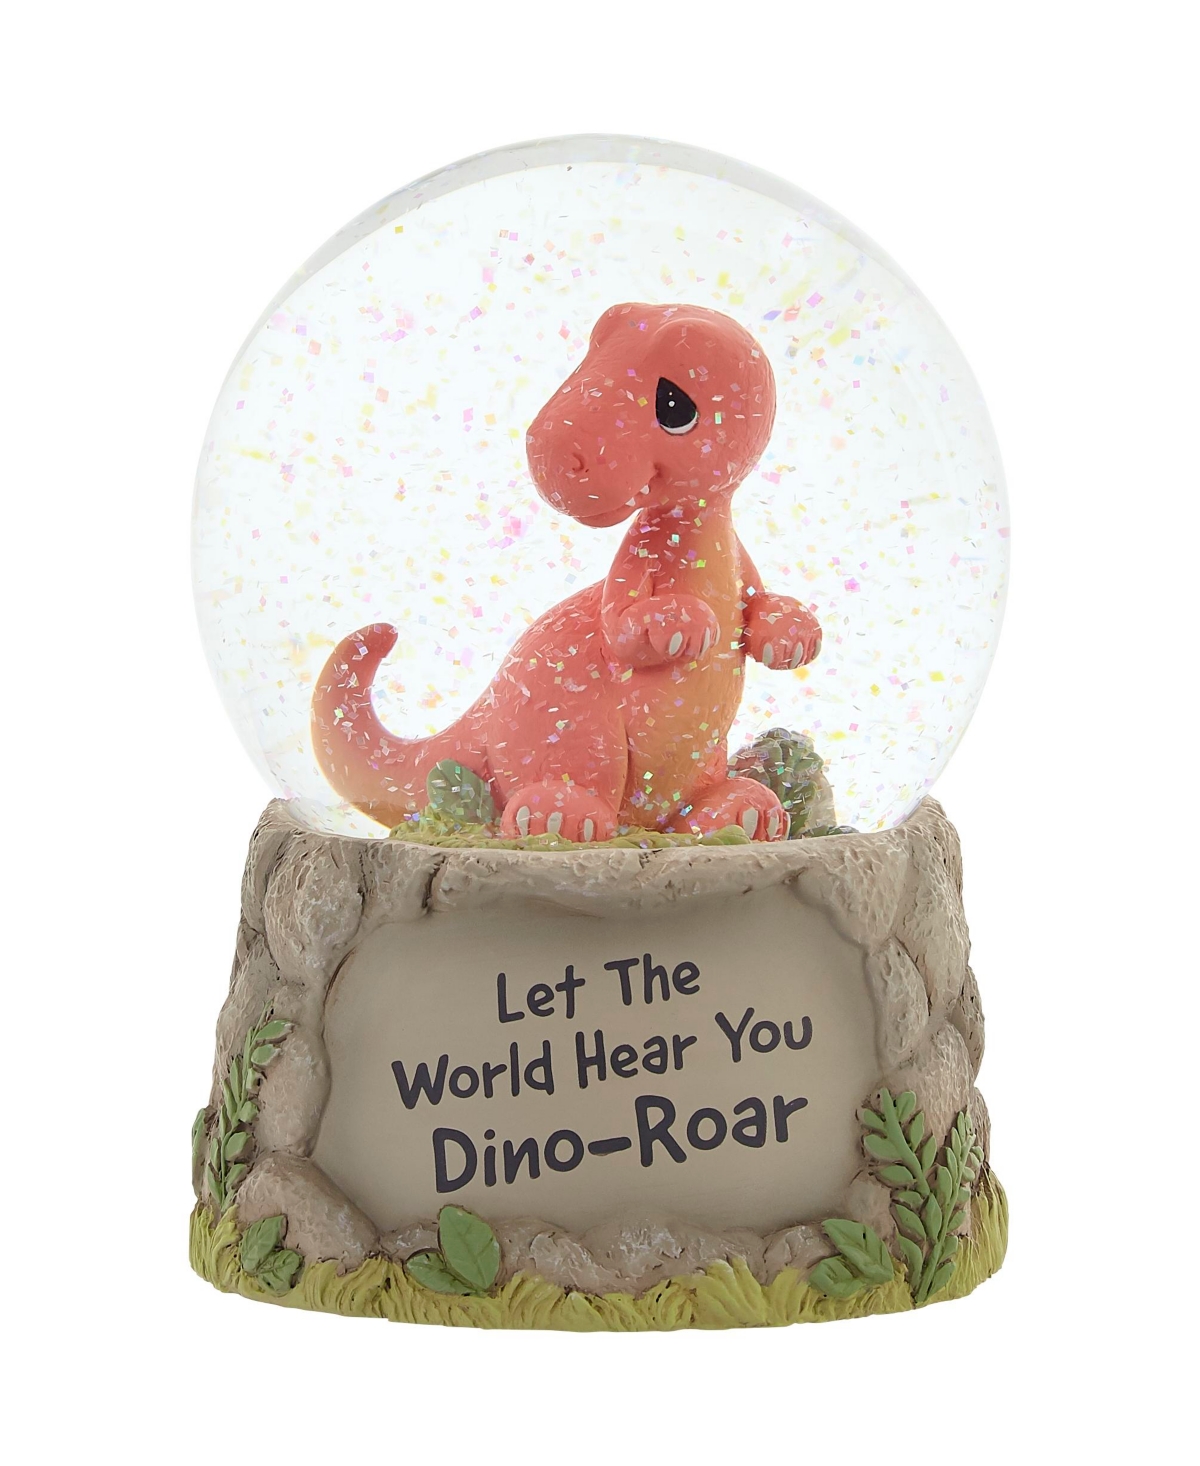 221108 Let The World Hear You Dino-Roar Musical Resin, Glass Snow Globe - Multicolor